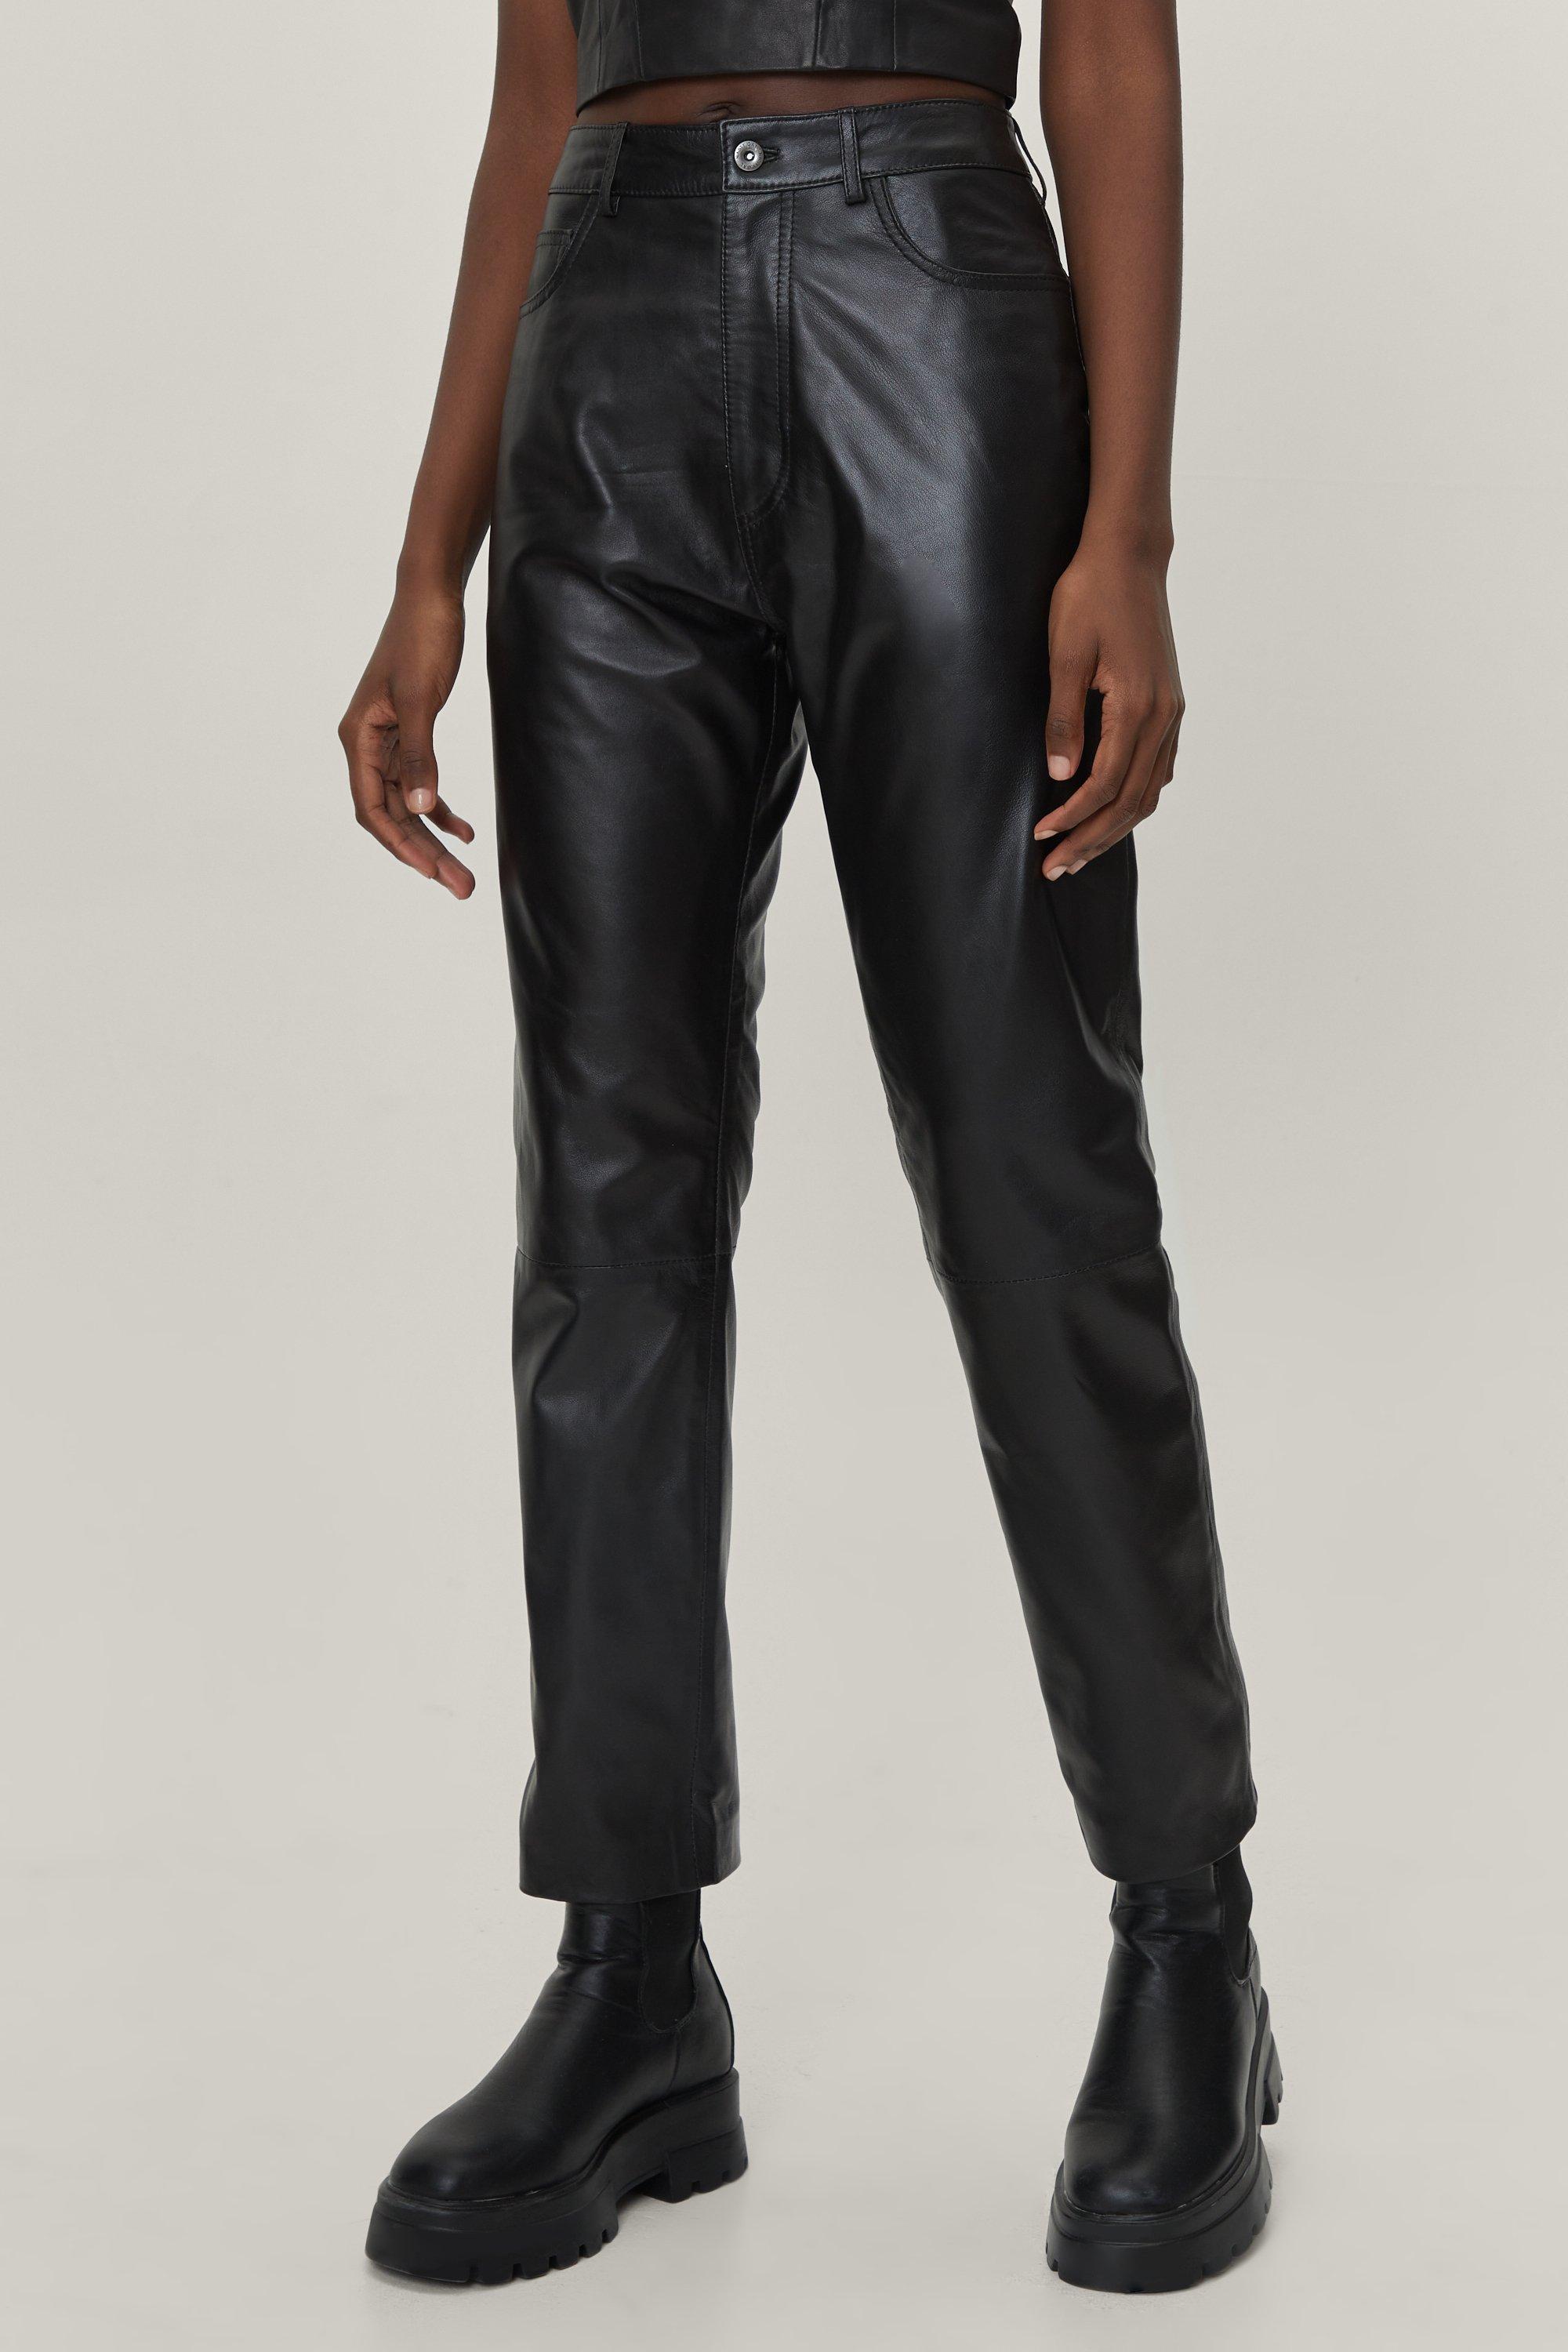 https://media.nastygal.com/i/nastygal/bgg00036_black_xl_2/black-real-leather-straight-leg-high-waisted-pants